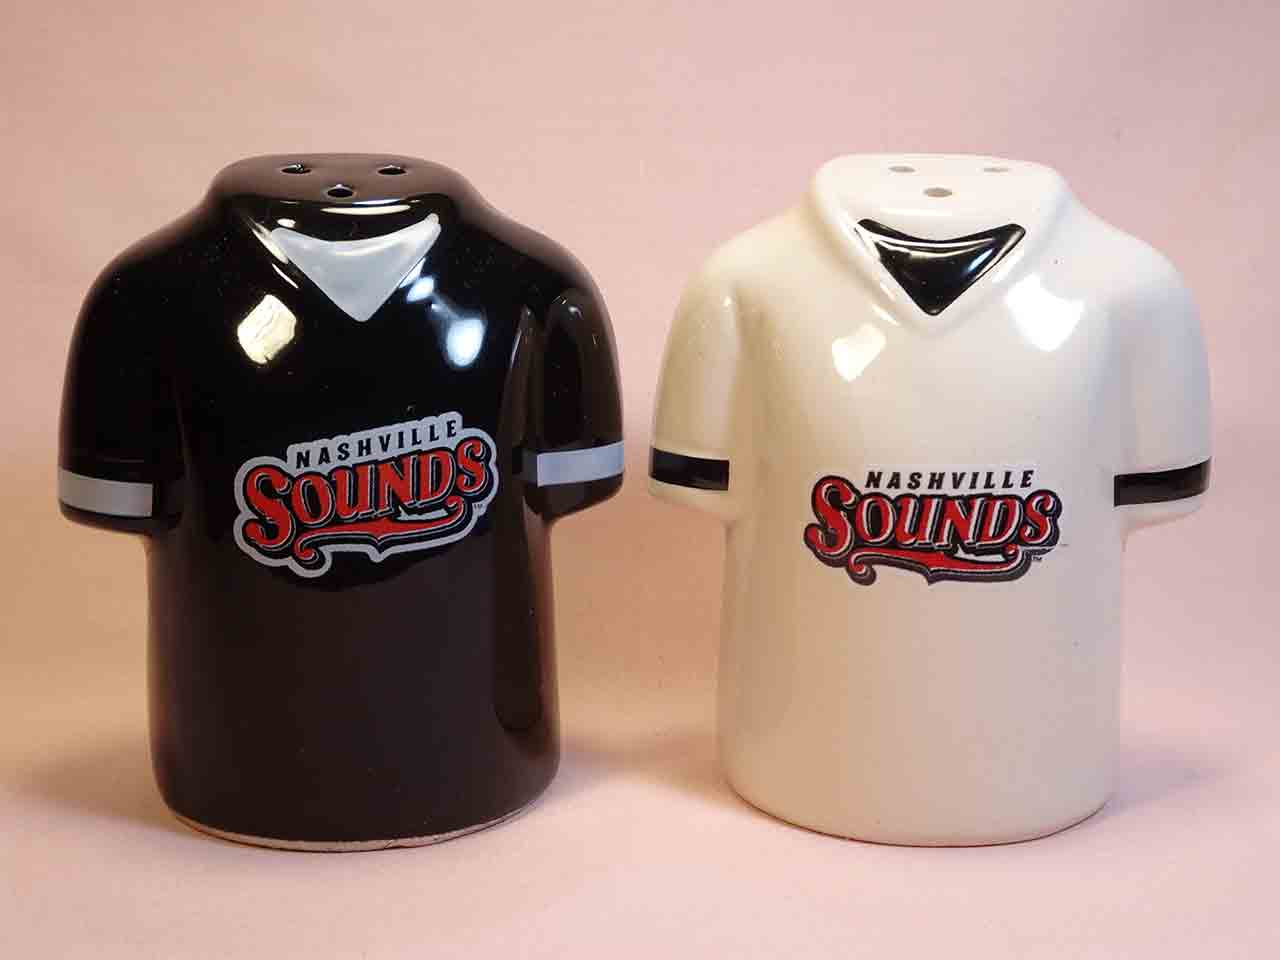 Nashville Sounds Minor League Baseball team stadium giveaway salt and pepper shakers